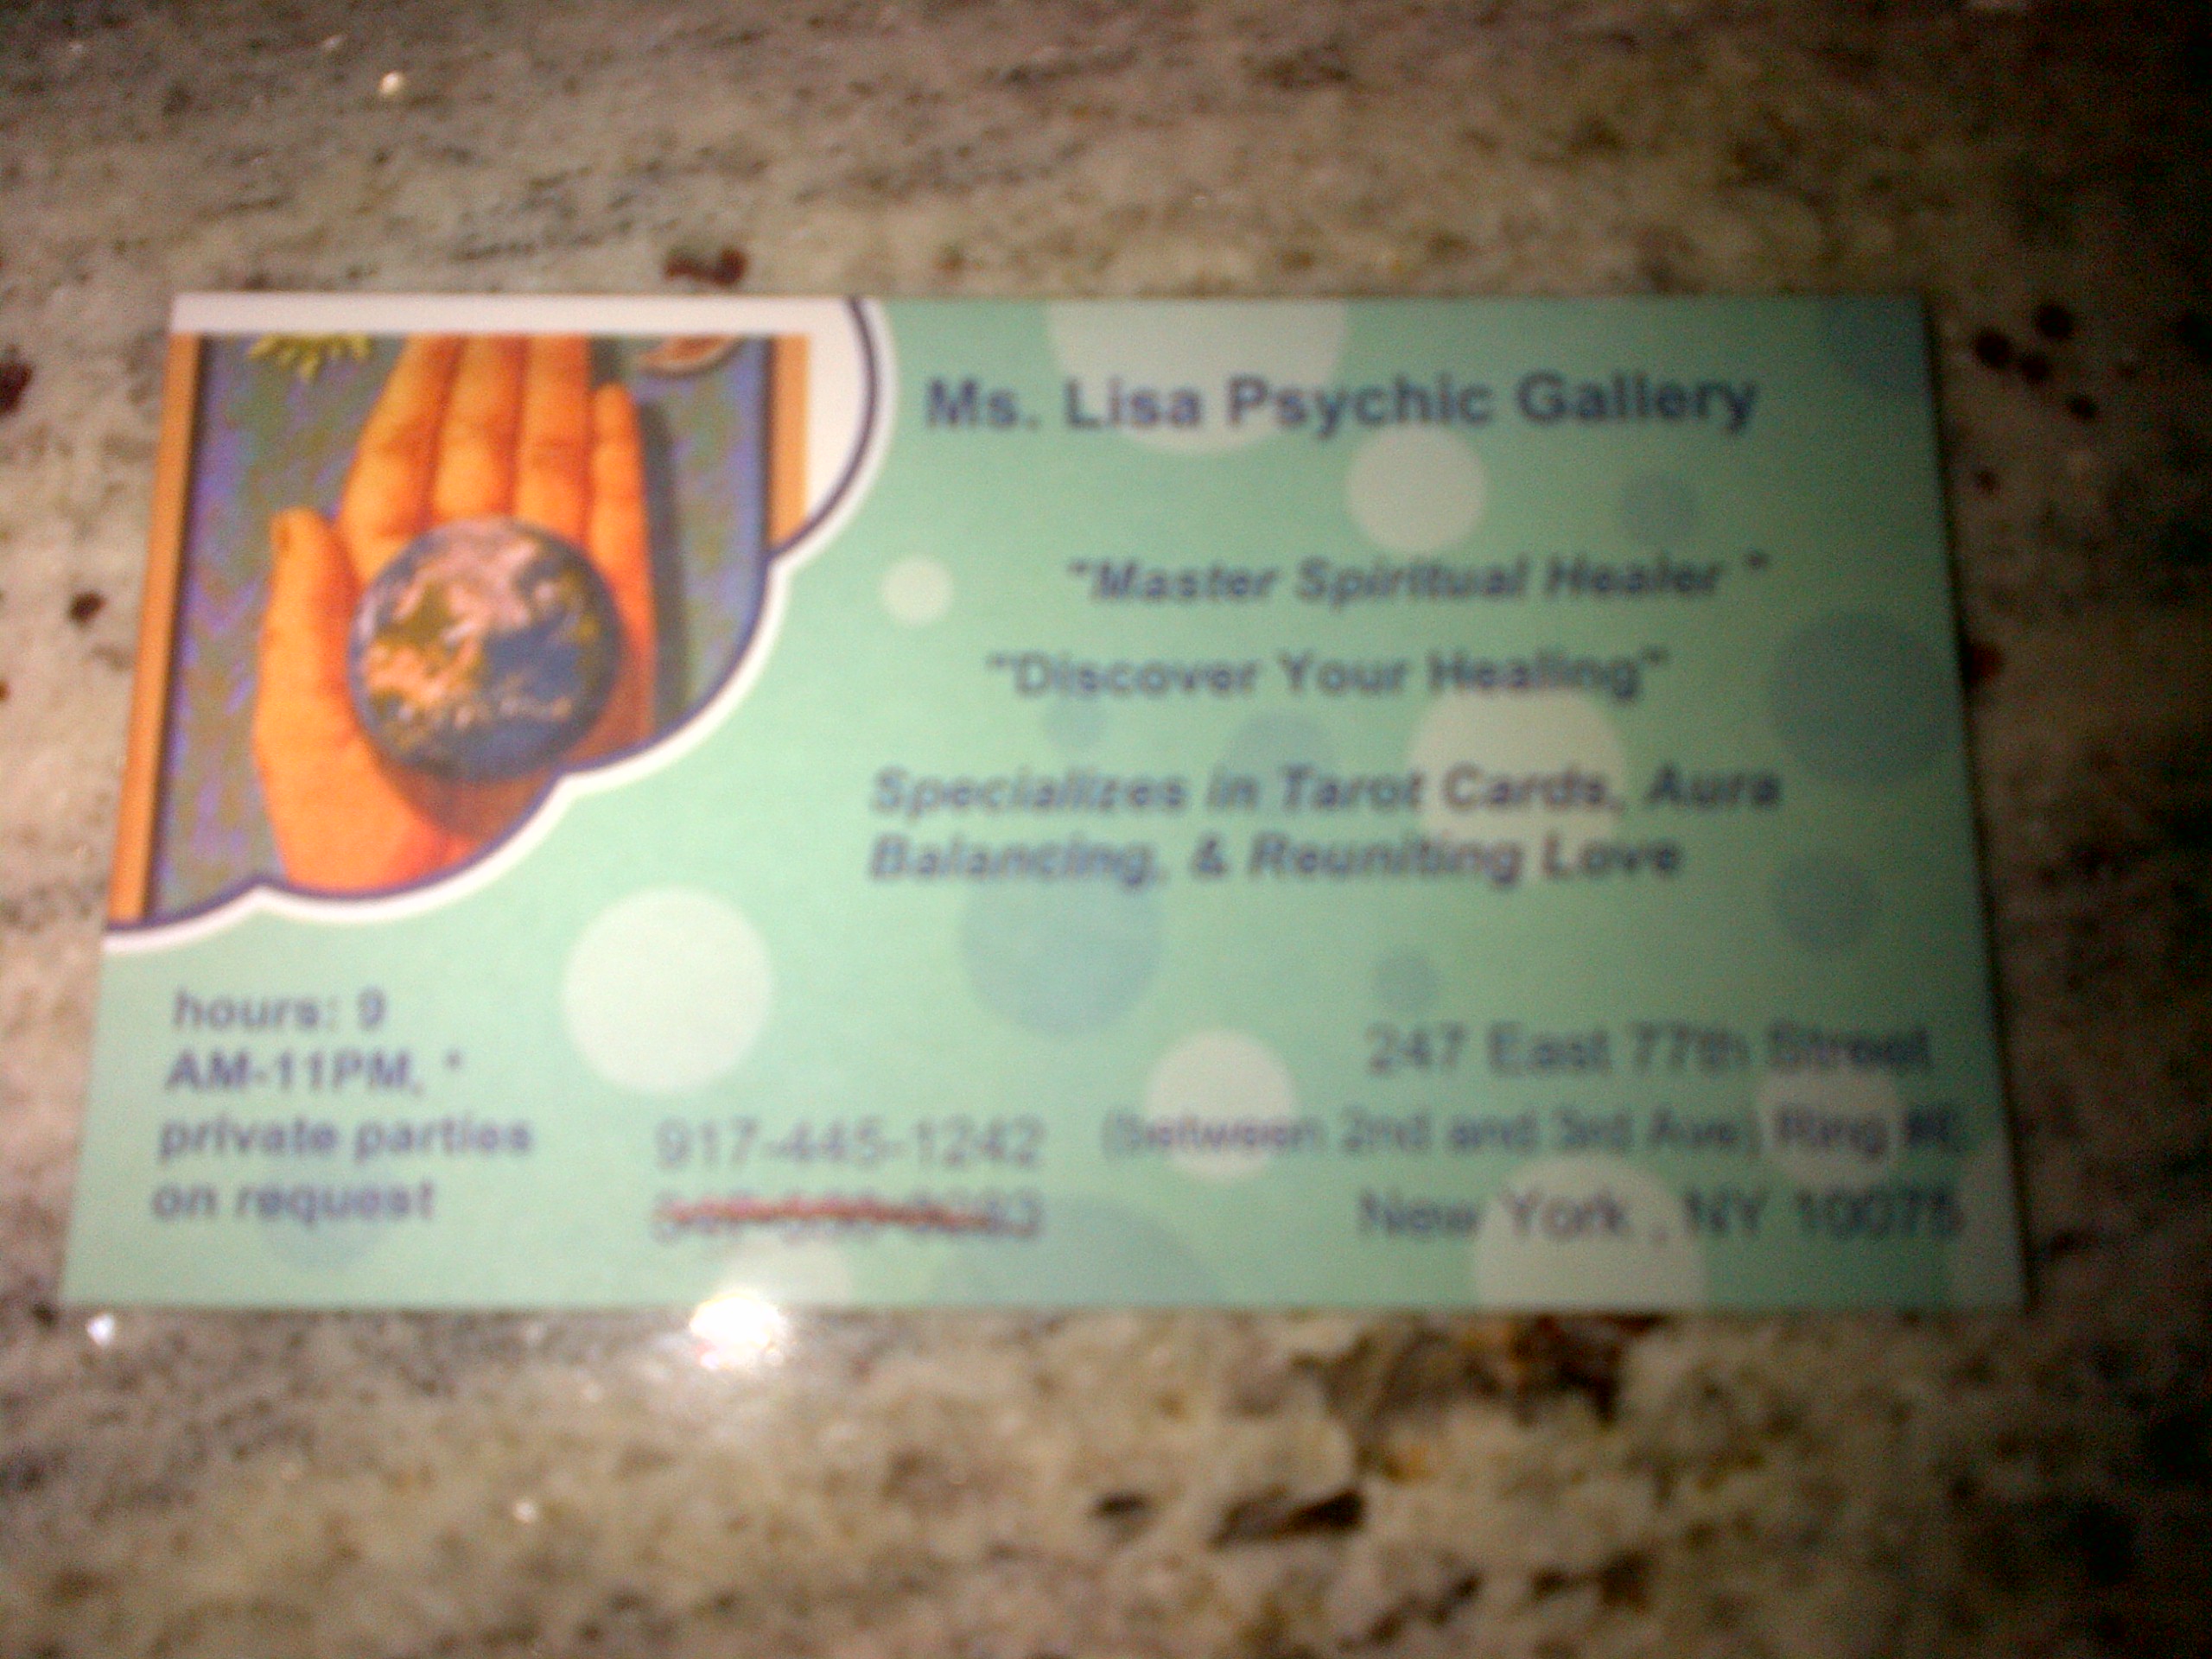 Betty Vlado's business card